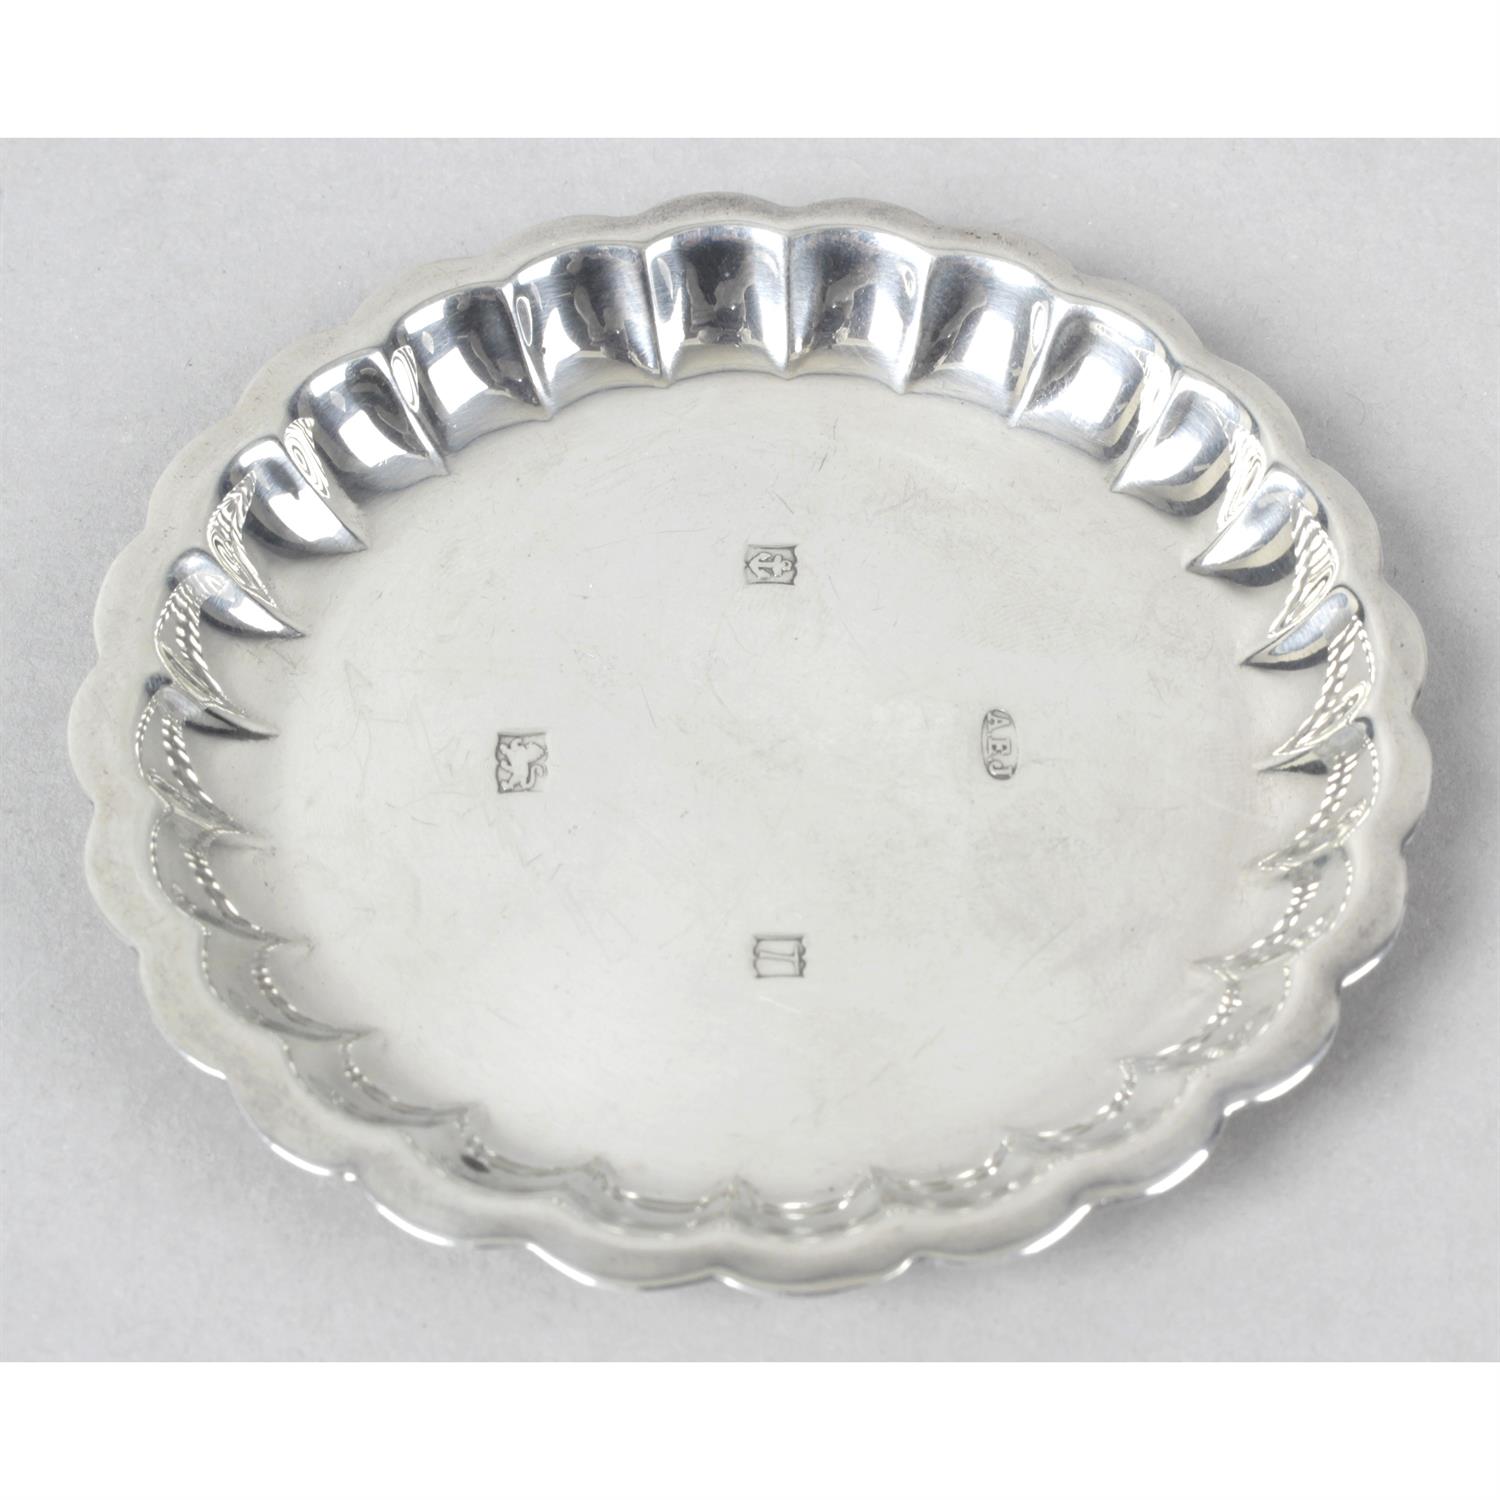 A mid-20th century small silver dish.